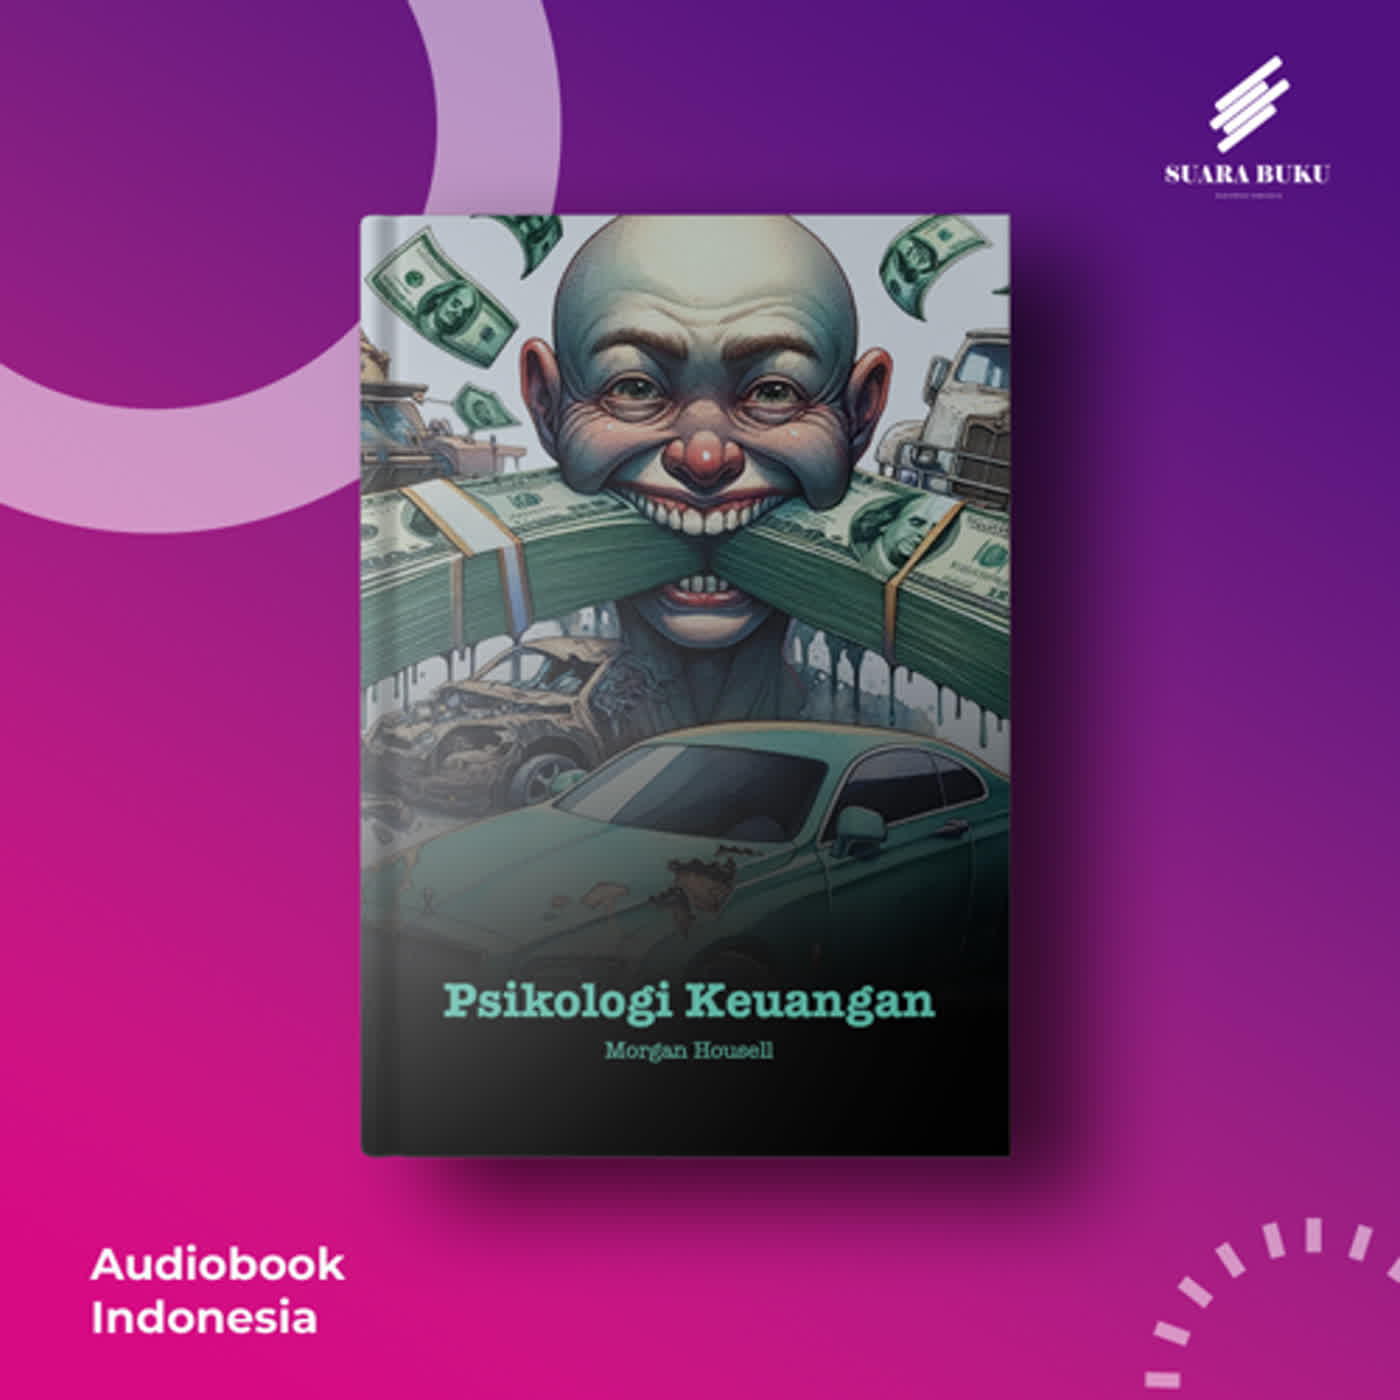 #5 Psikologi Keuangan Karya Morgan Housell - Audiobook Indonesia Suara Buku